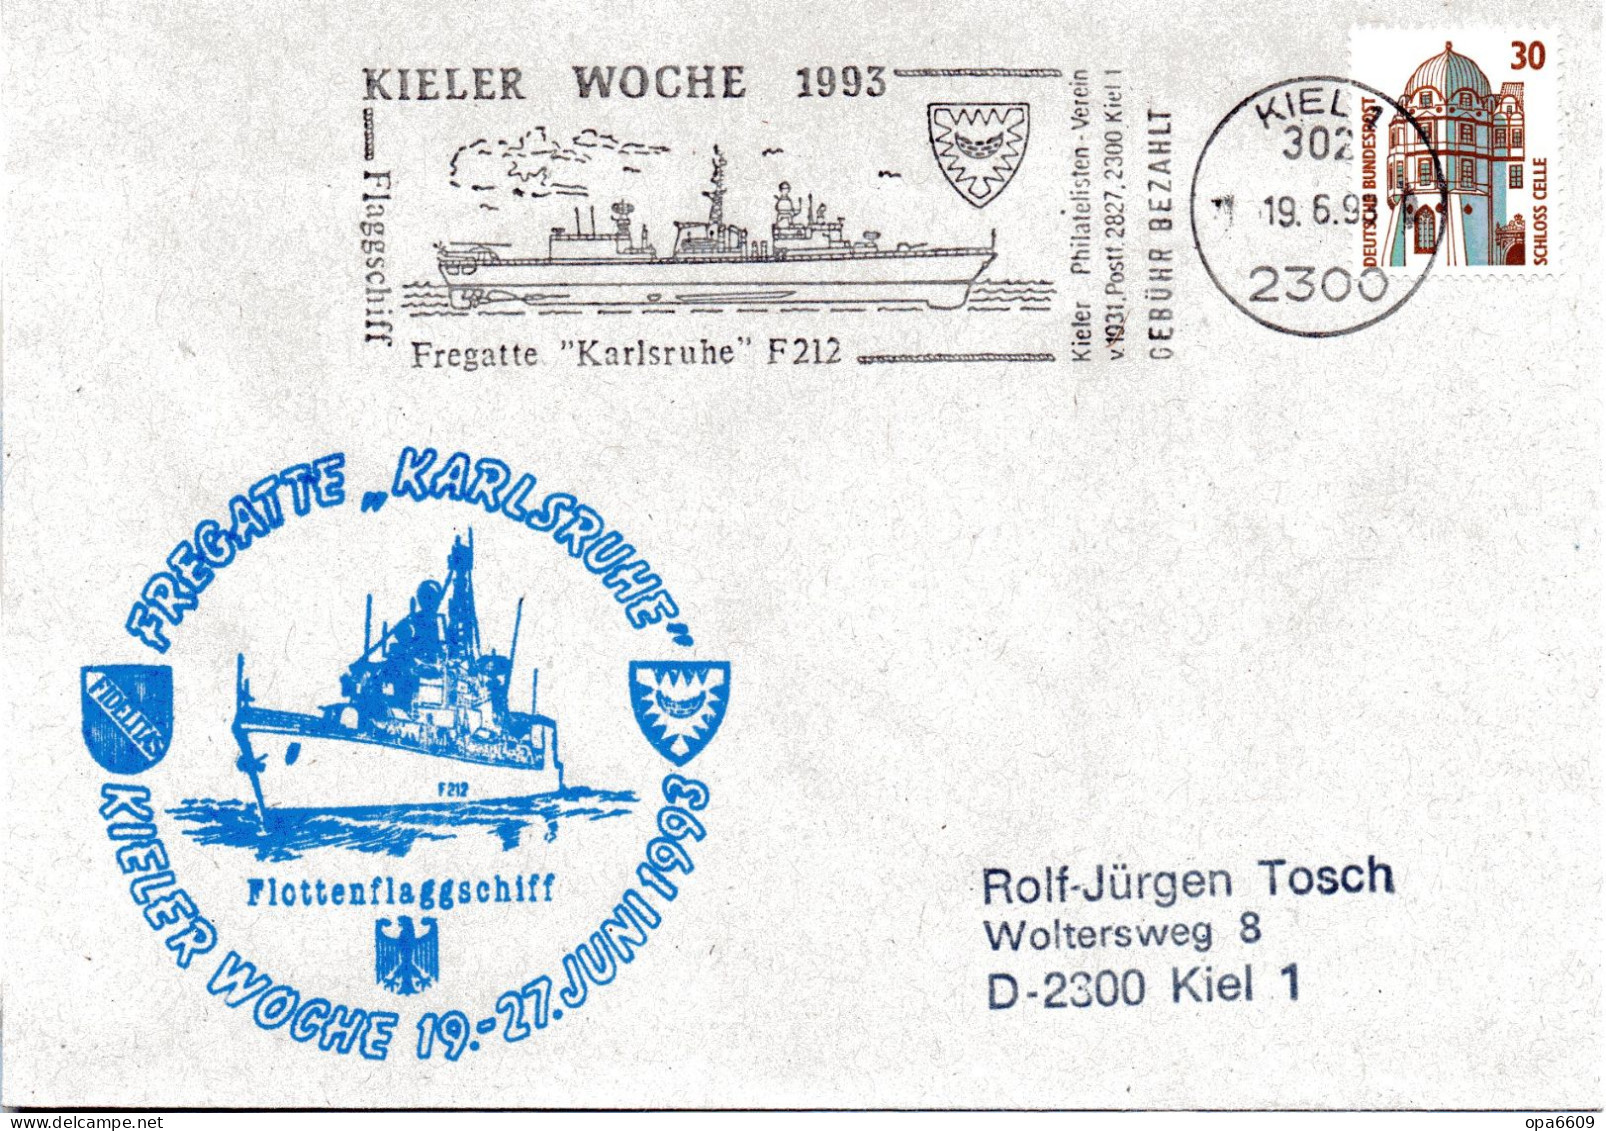 (Freg 3)BRD Cachetumschlag FREGATTE "KARLSRUHE" F212 - Flottenflaggschiff Kieler Woche 1993" EF BRD MWST 19.6.93 KIEL - Schiffe